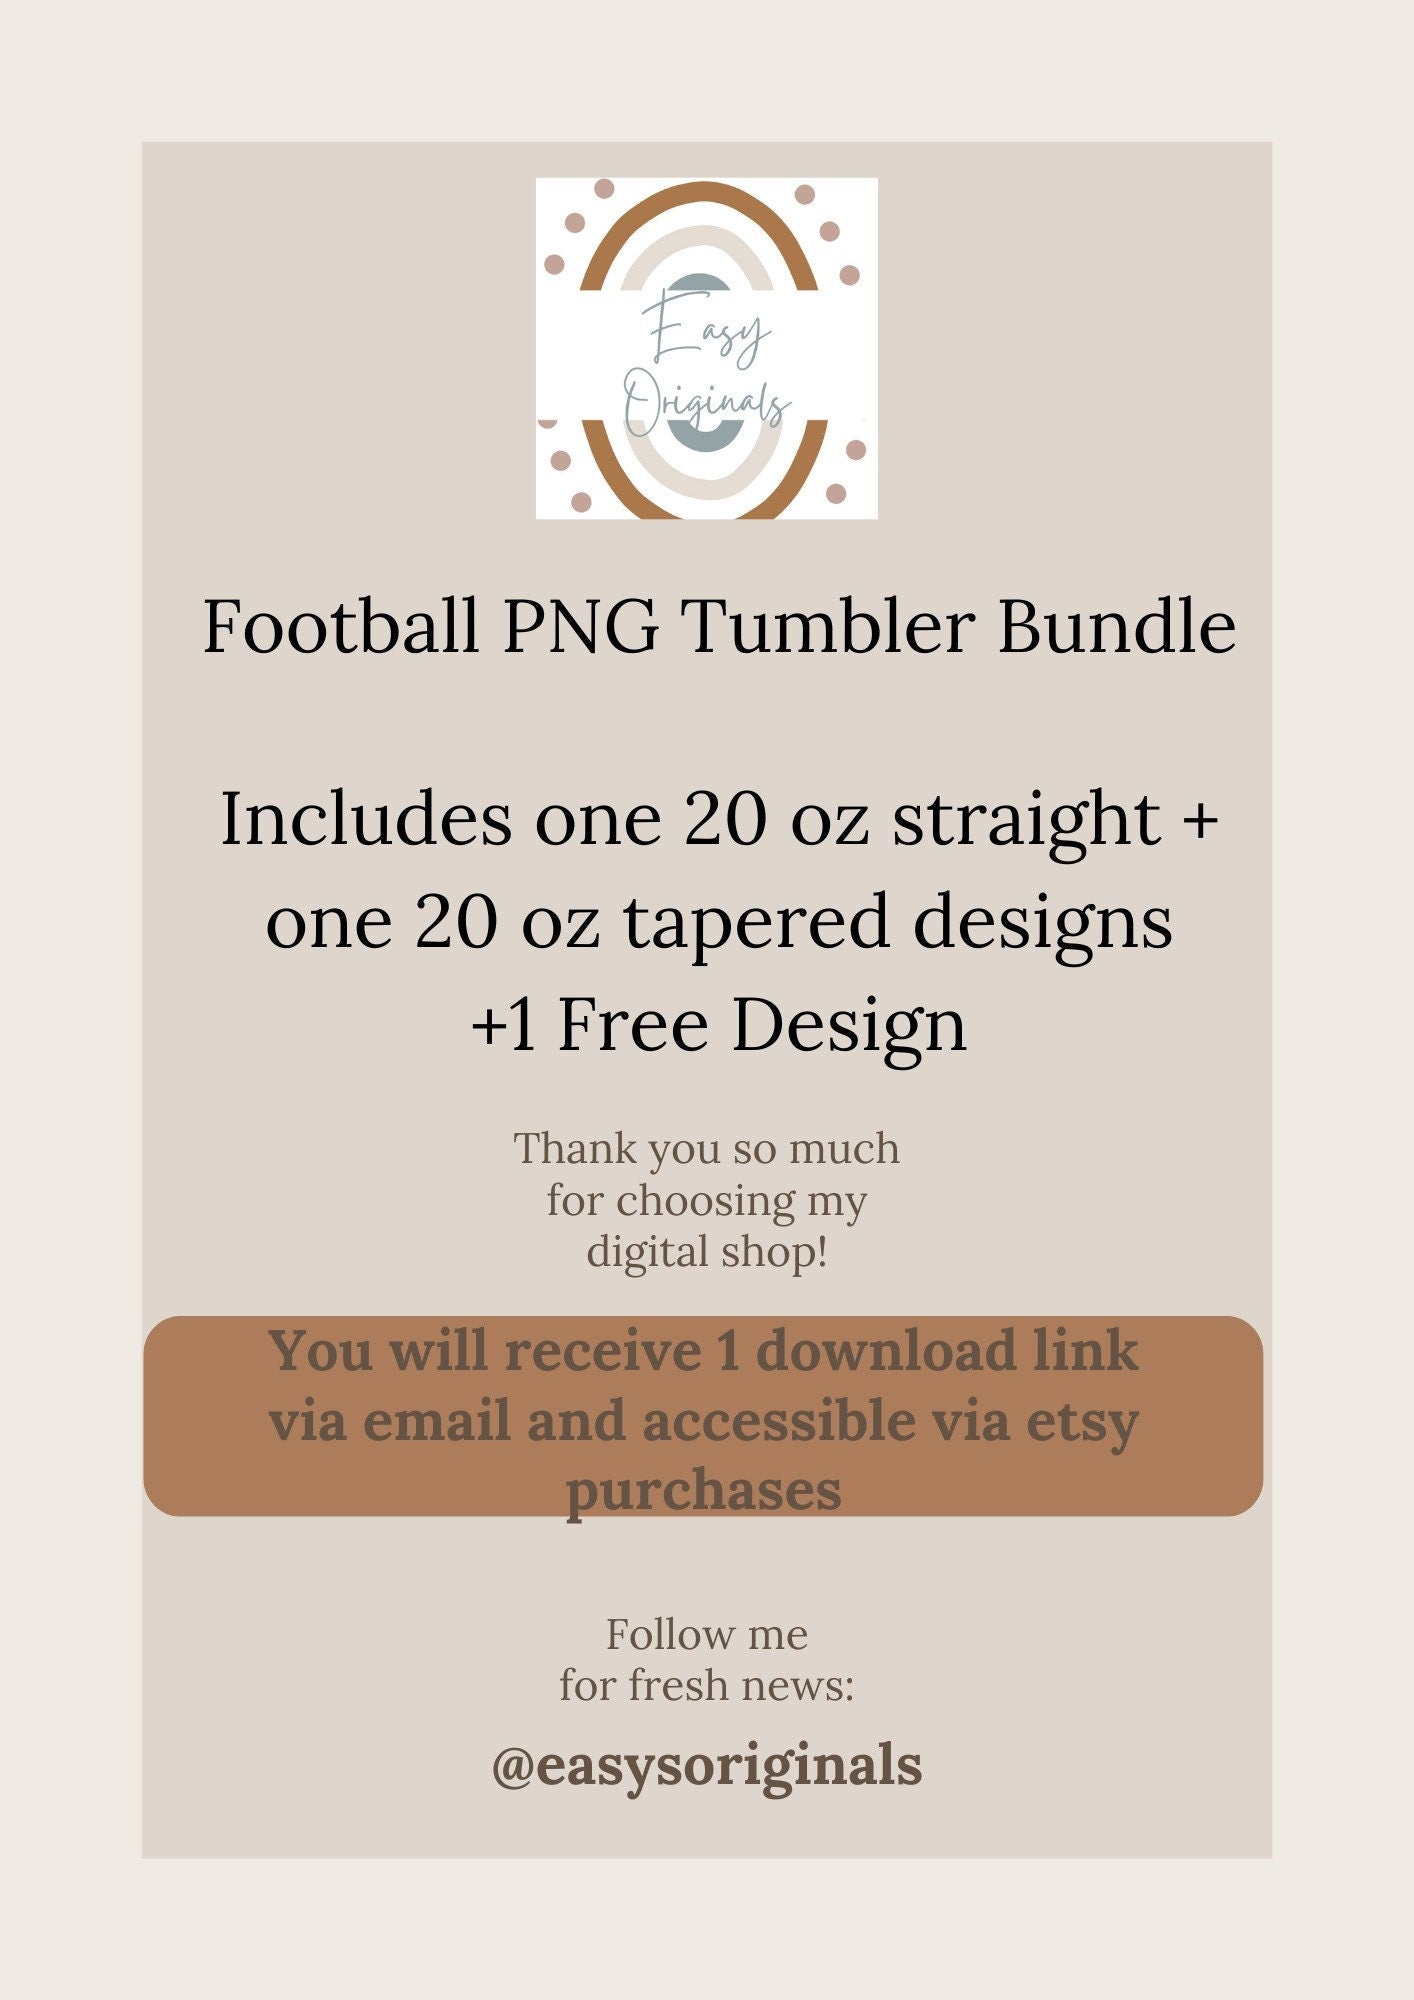 American football Tumbler Wraps - Football Tumbler Designs - Skinny 20 oz - Football League Sublimation